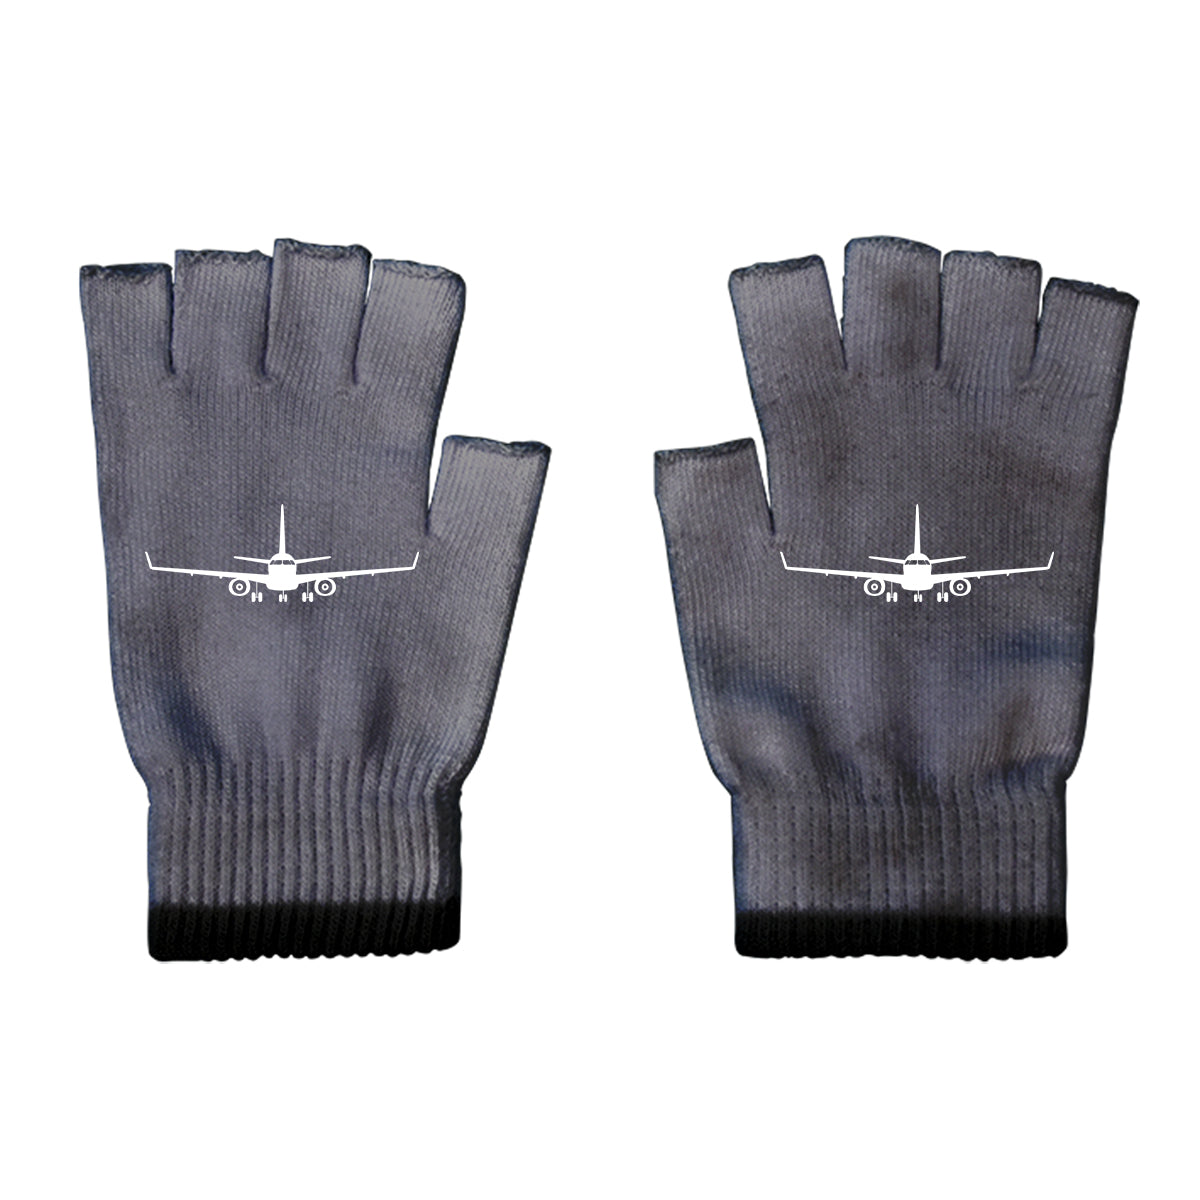 Embraer E-190 Silhouette Plane Designed Cut Gloves